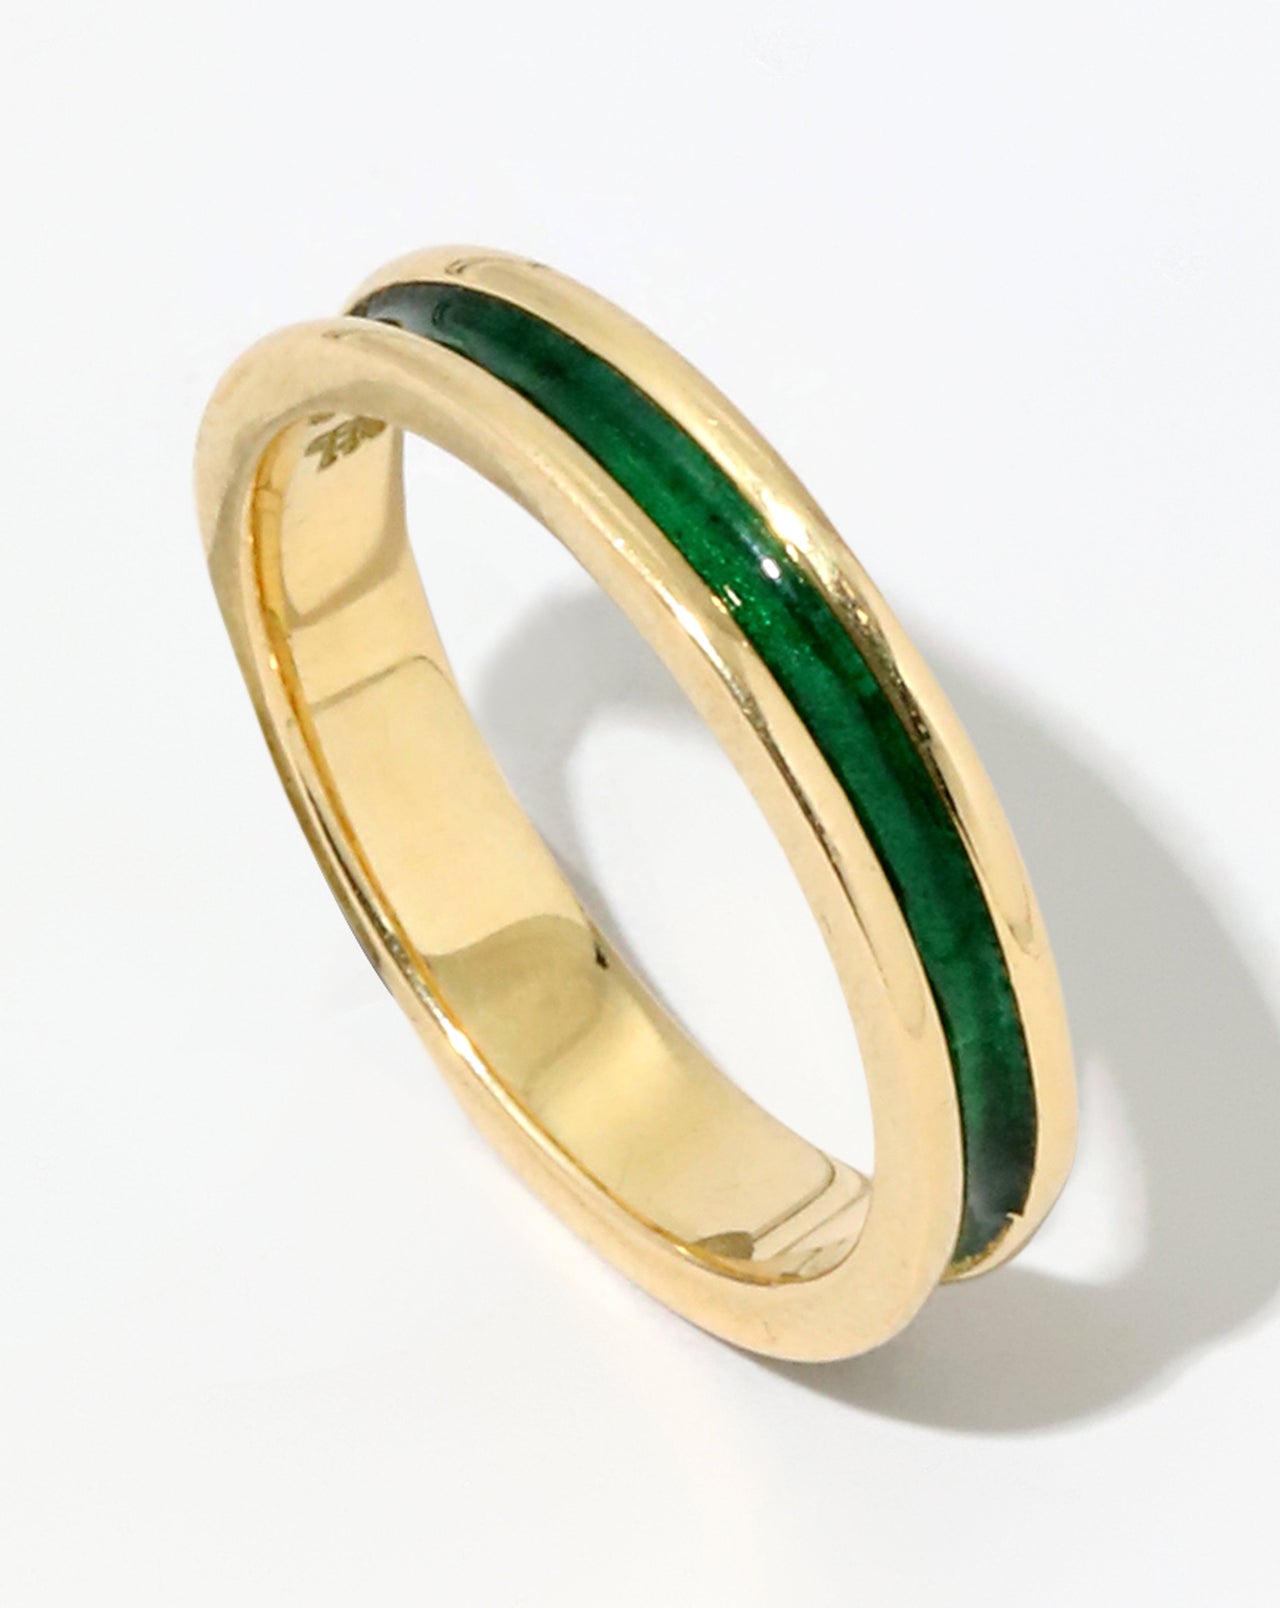 Vintage 1970s 18k Gold Green Enamel Band Ring - Photo 2